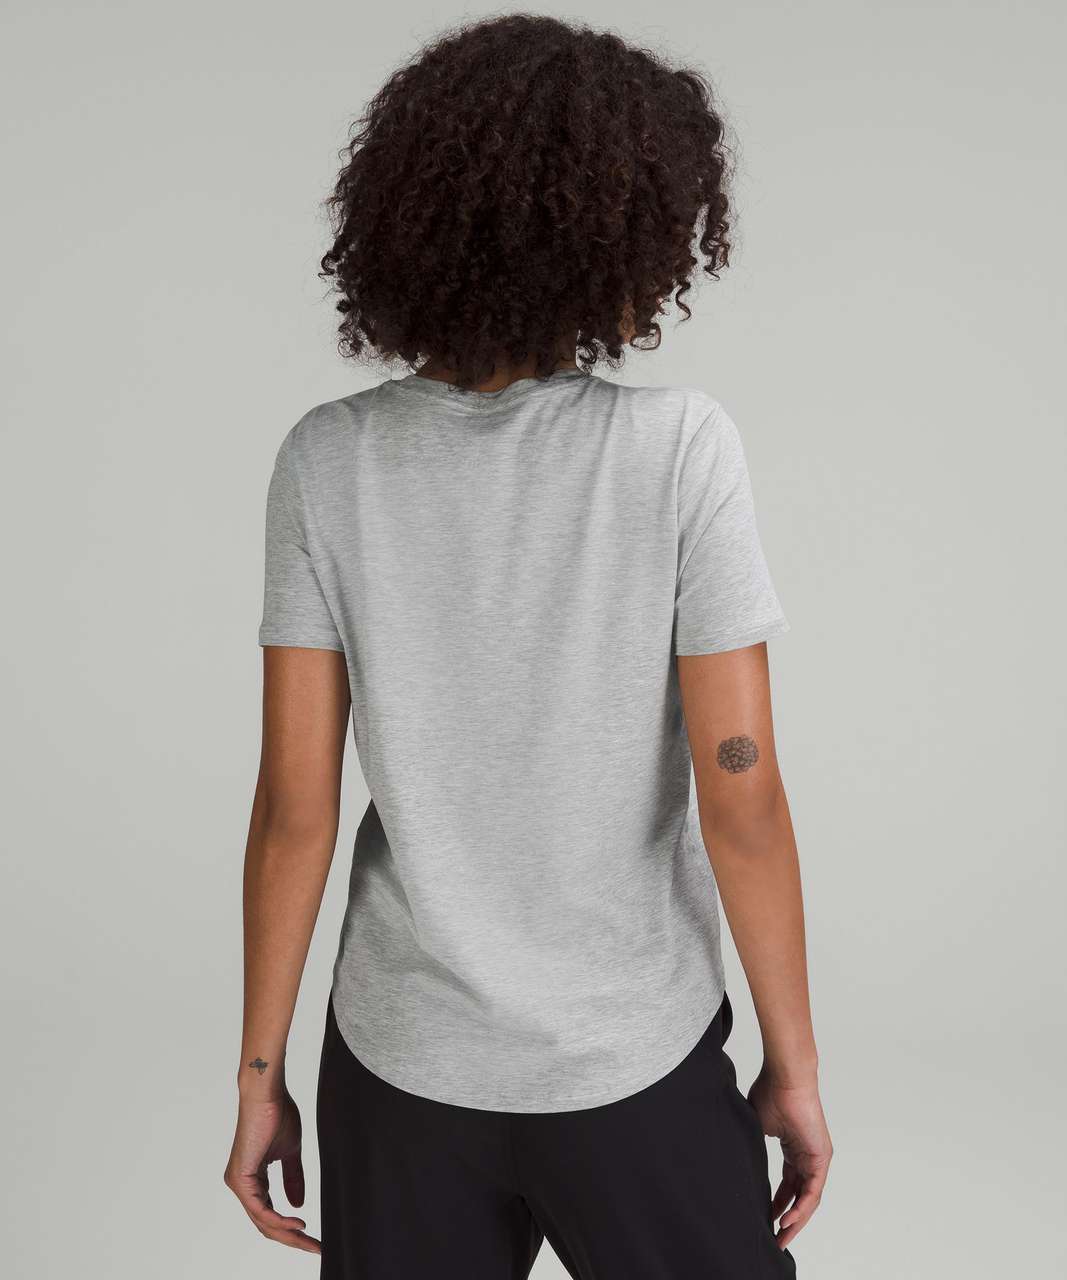 Lululemon Love Crewneck T-Shirt - Heathered Core Light Grey